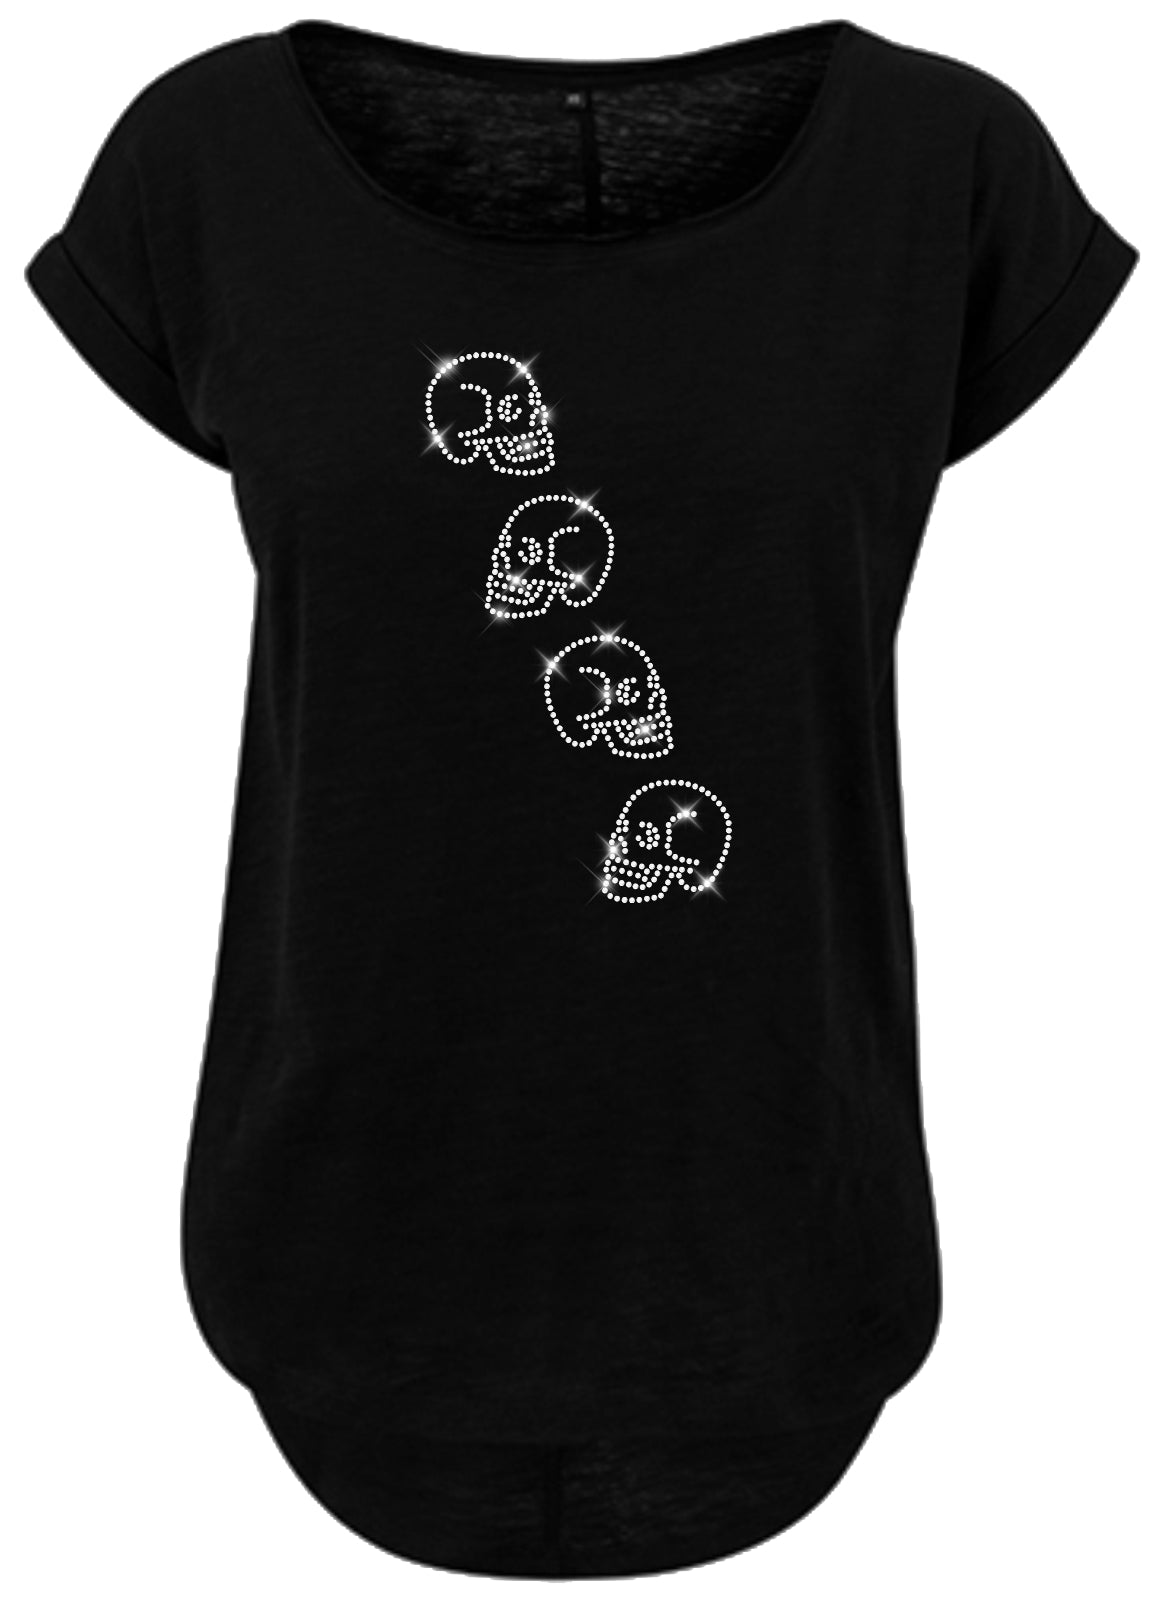 Blingeling®Shirts Damen T-Shirt   vier kleine Totenköpfe in Strass Kristall